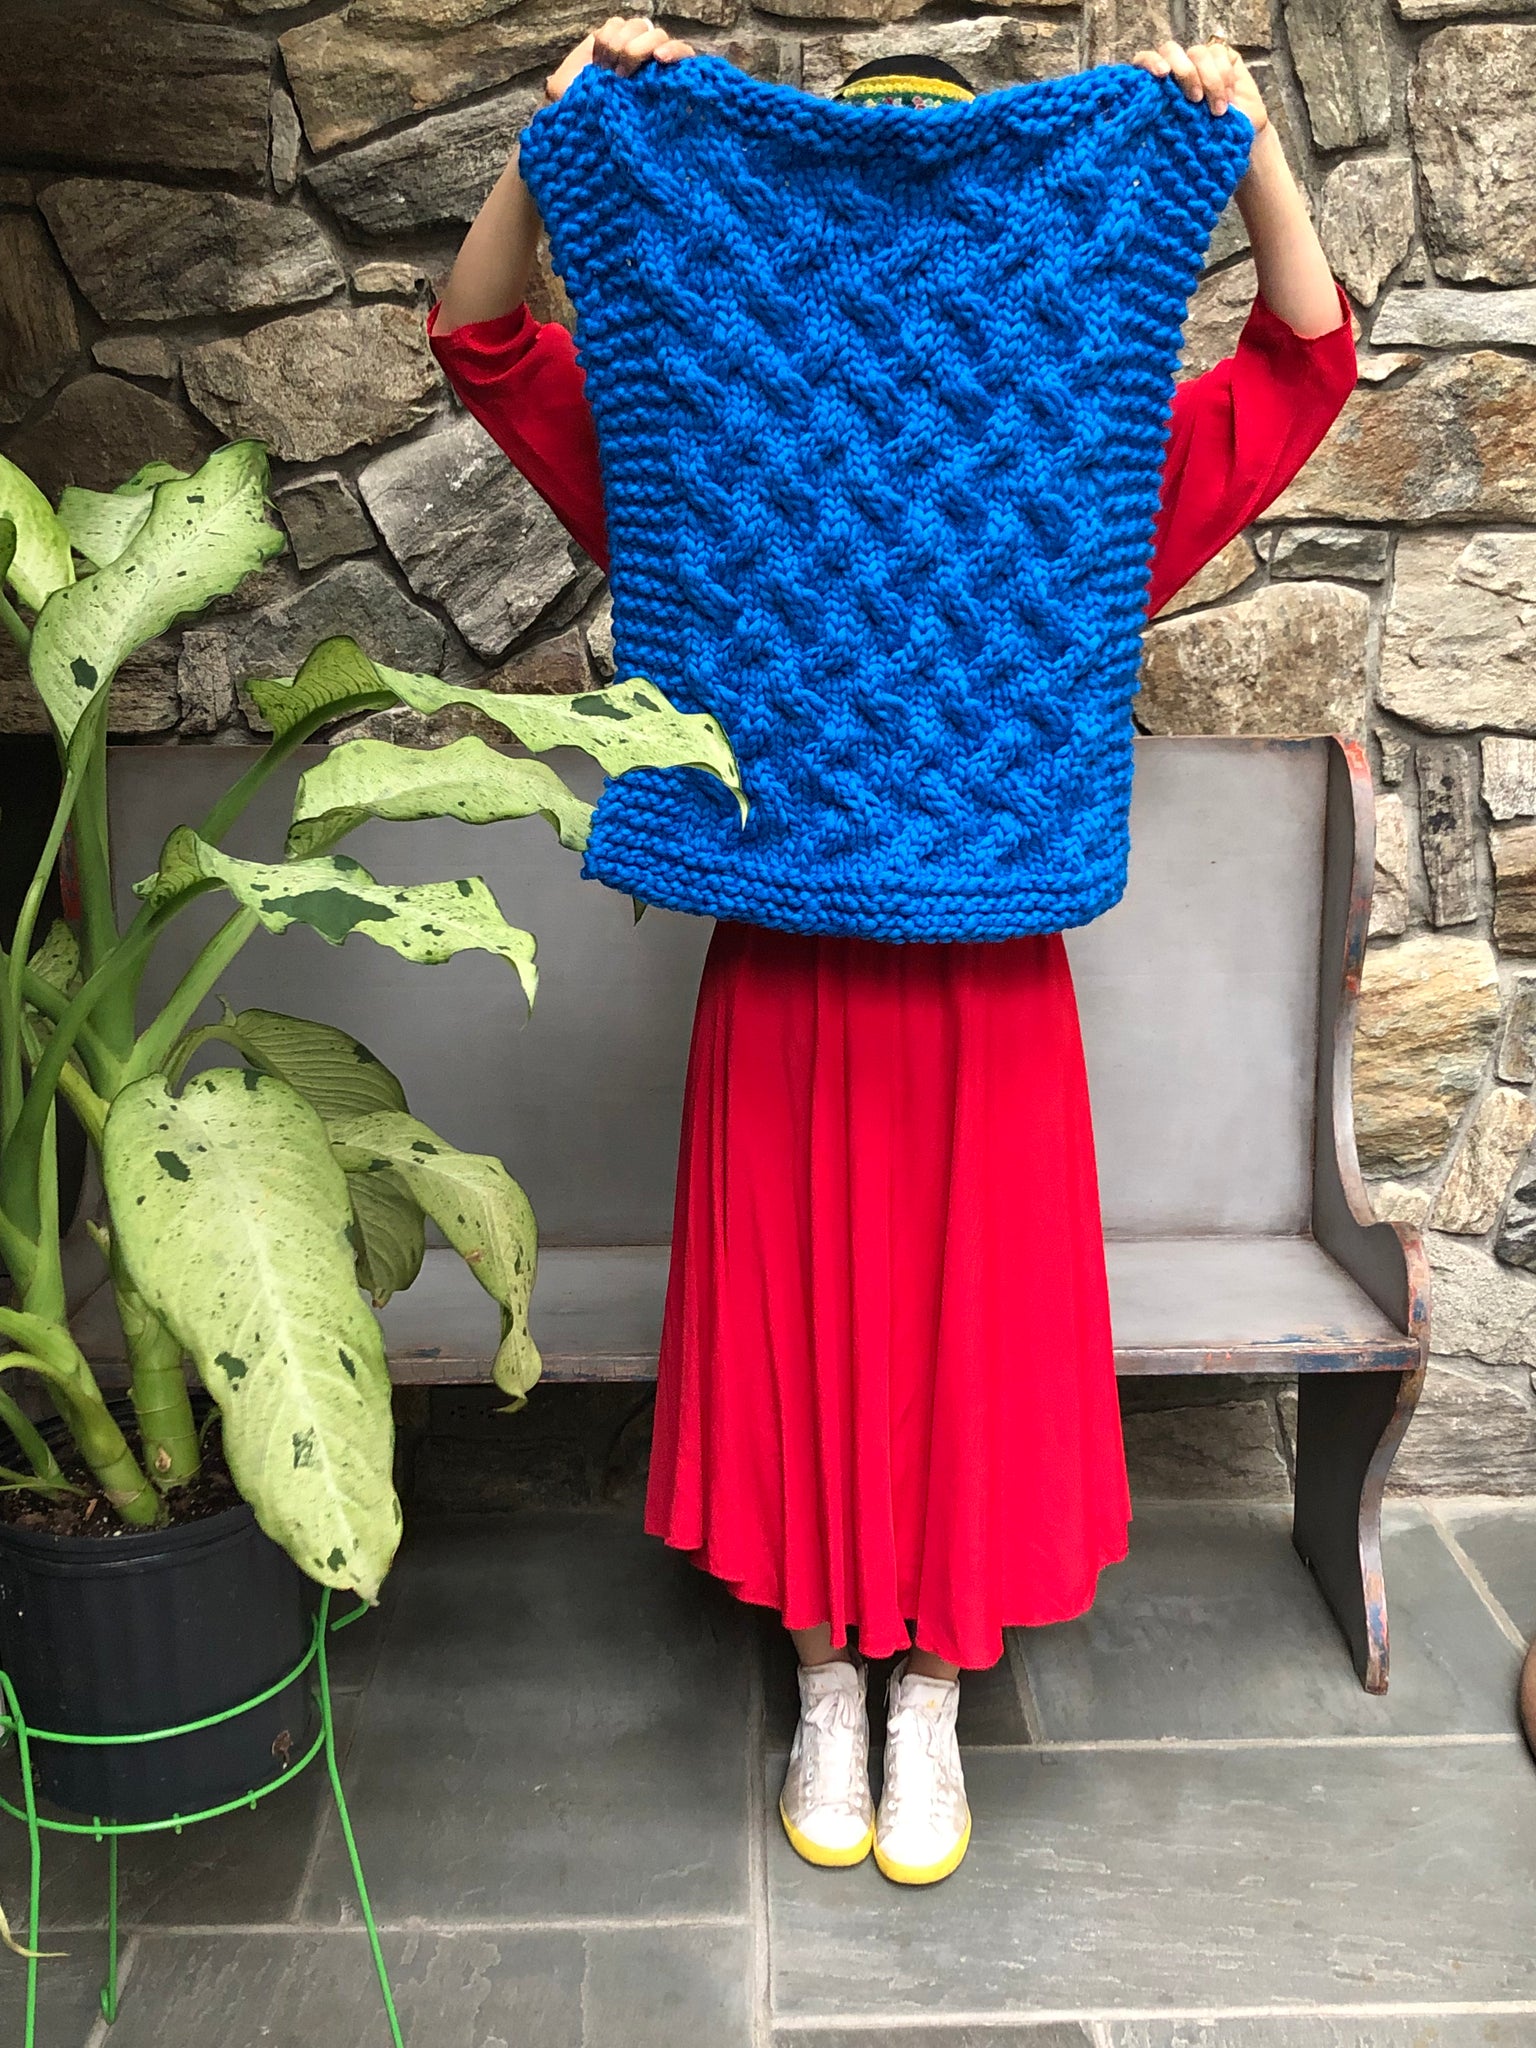 DIY Kit - Crochet Baby Blanket - Merino No. 5 – Loopy Mango